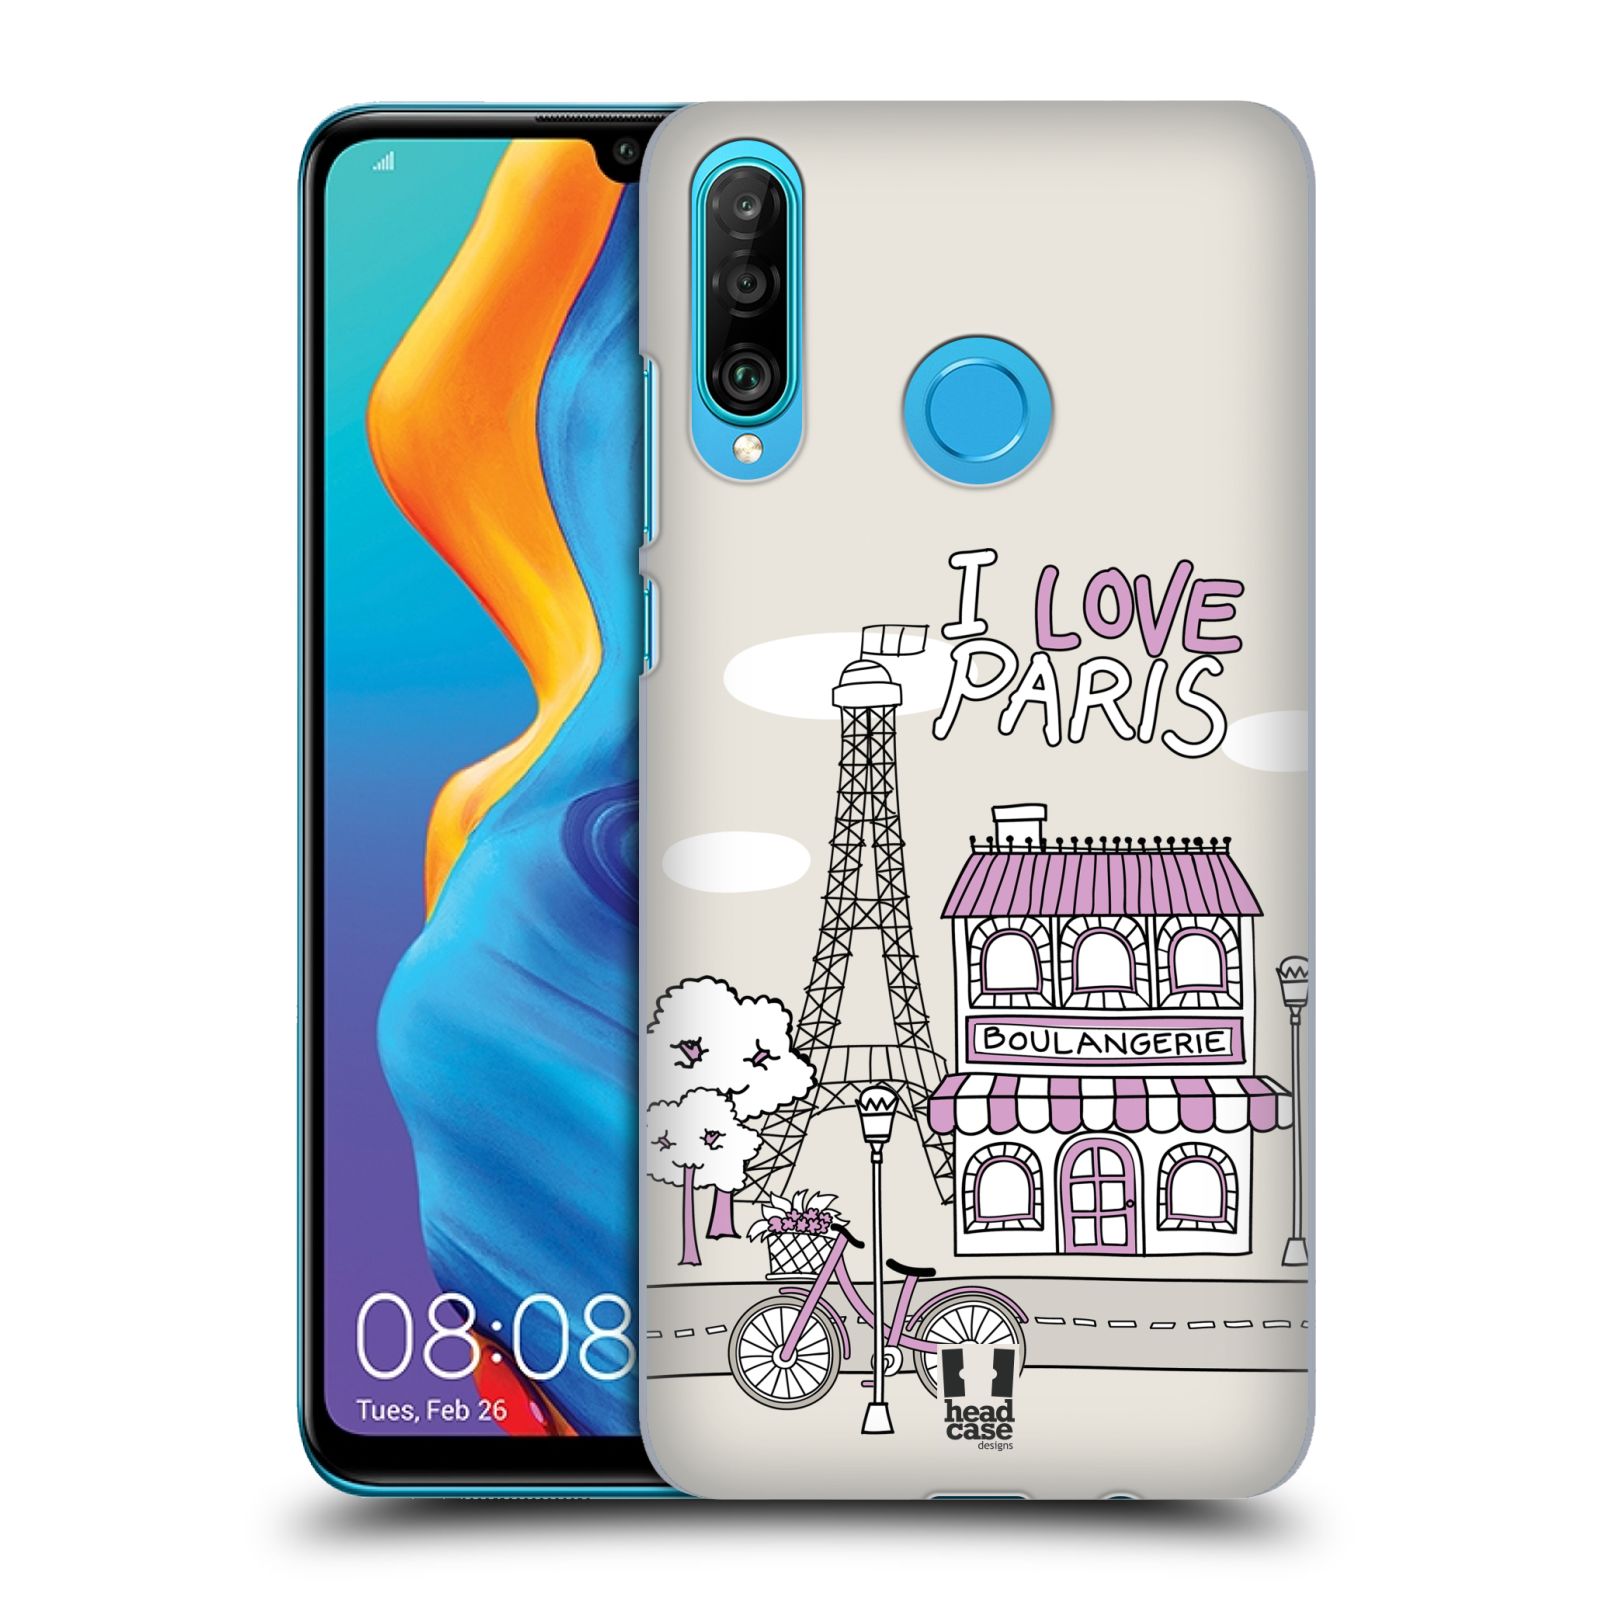 Pouzdro na mobil Huawei P30 LITE - HEAD CASE - vzor Kreslená městečka FIALOVÁ, Paříž, Francie, I LOVE PARIS